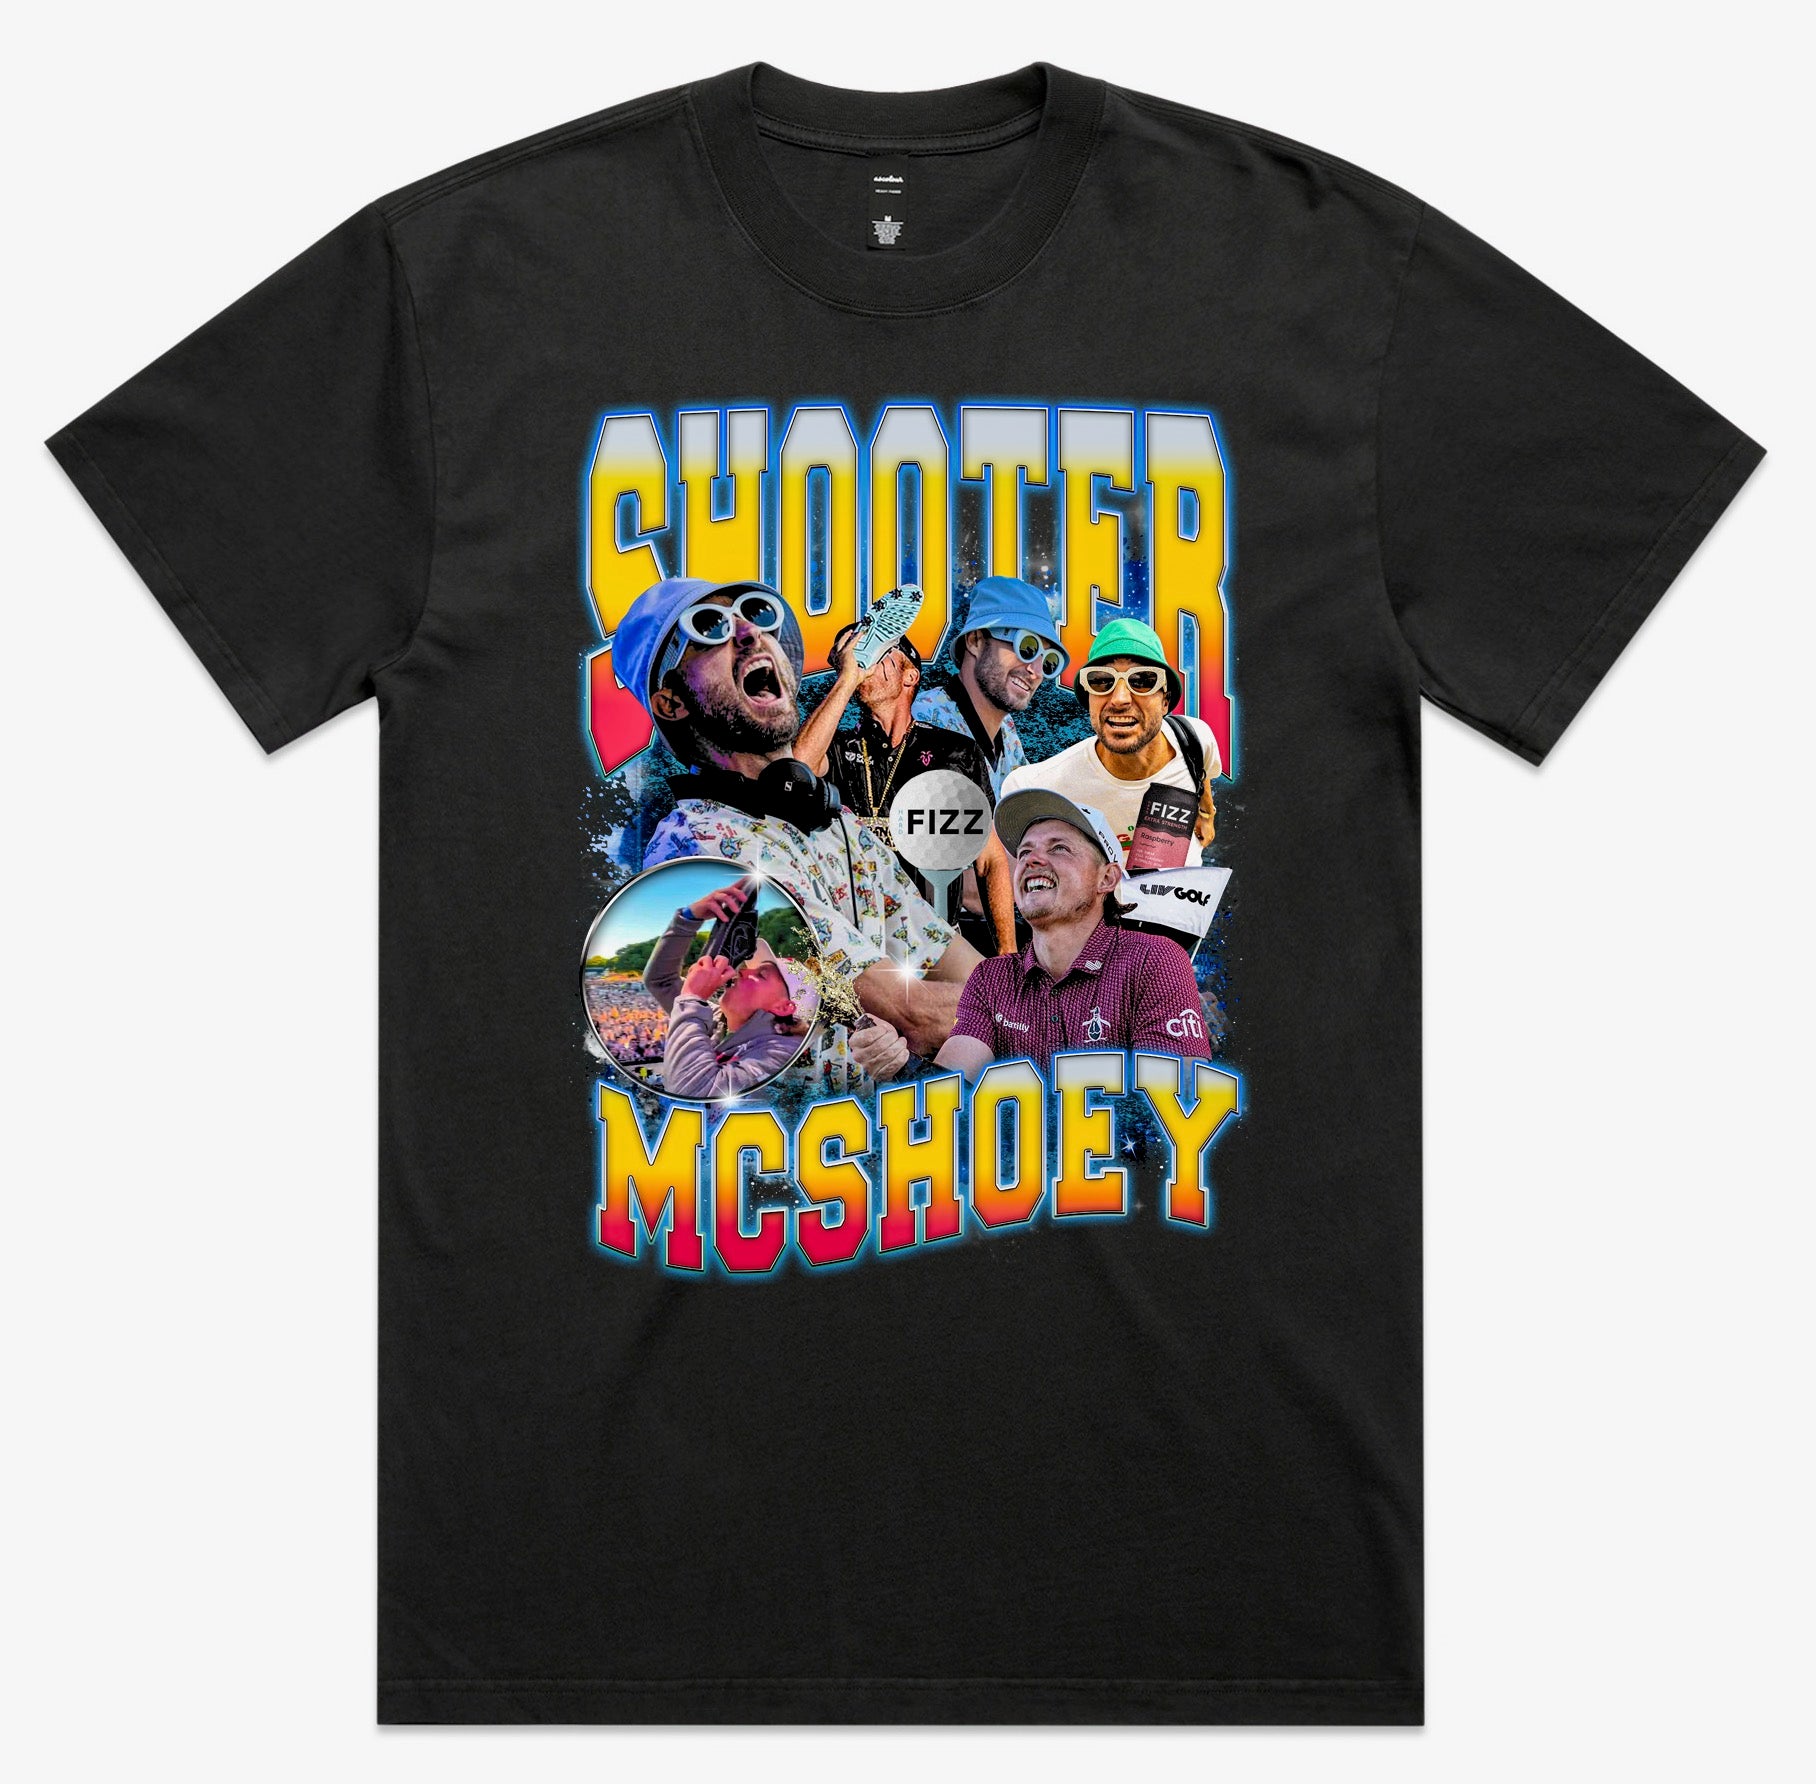 SHOOTER MCSHOEY TEE - SHIPPING MAY 5TH